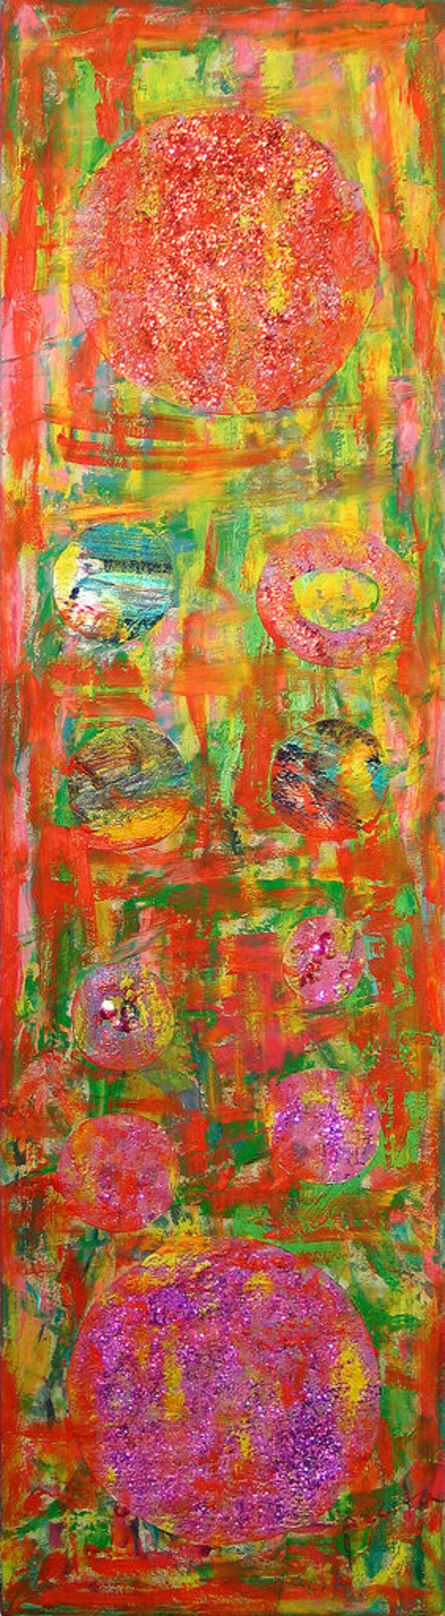 Pacita Abad, ‘Orange ball’, 2002